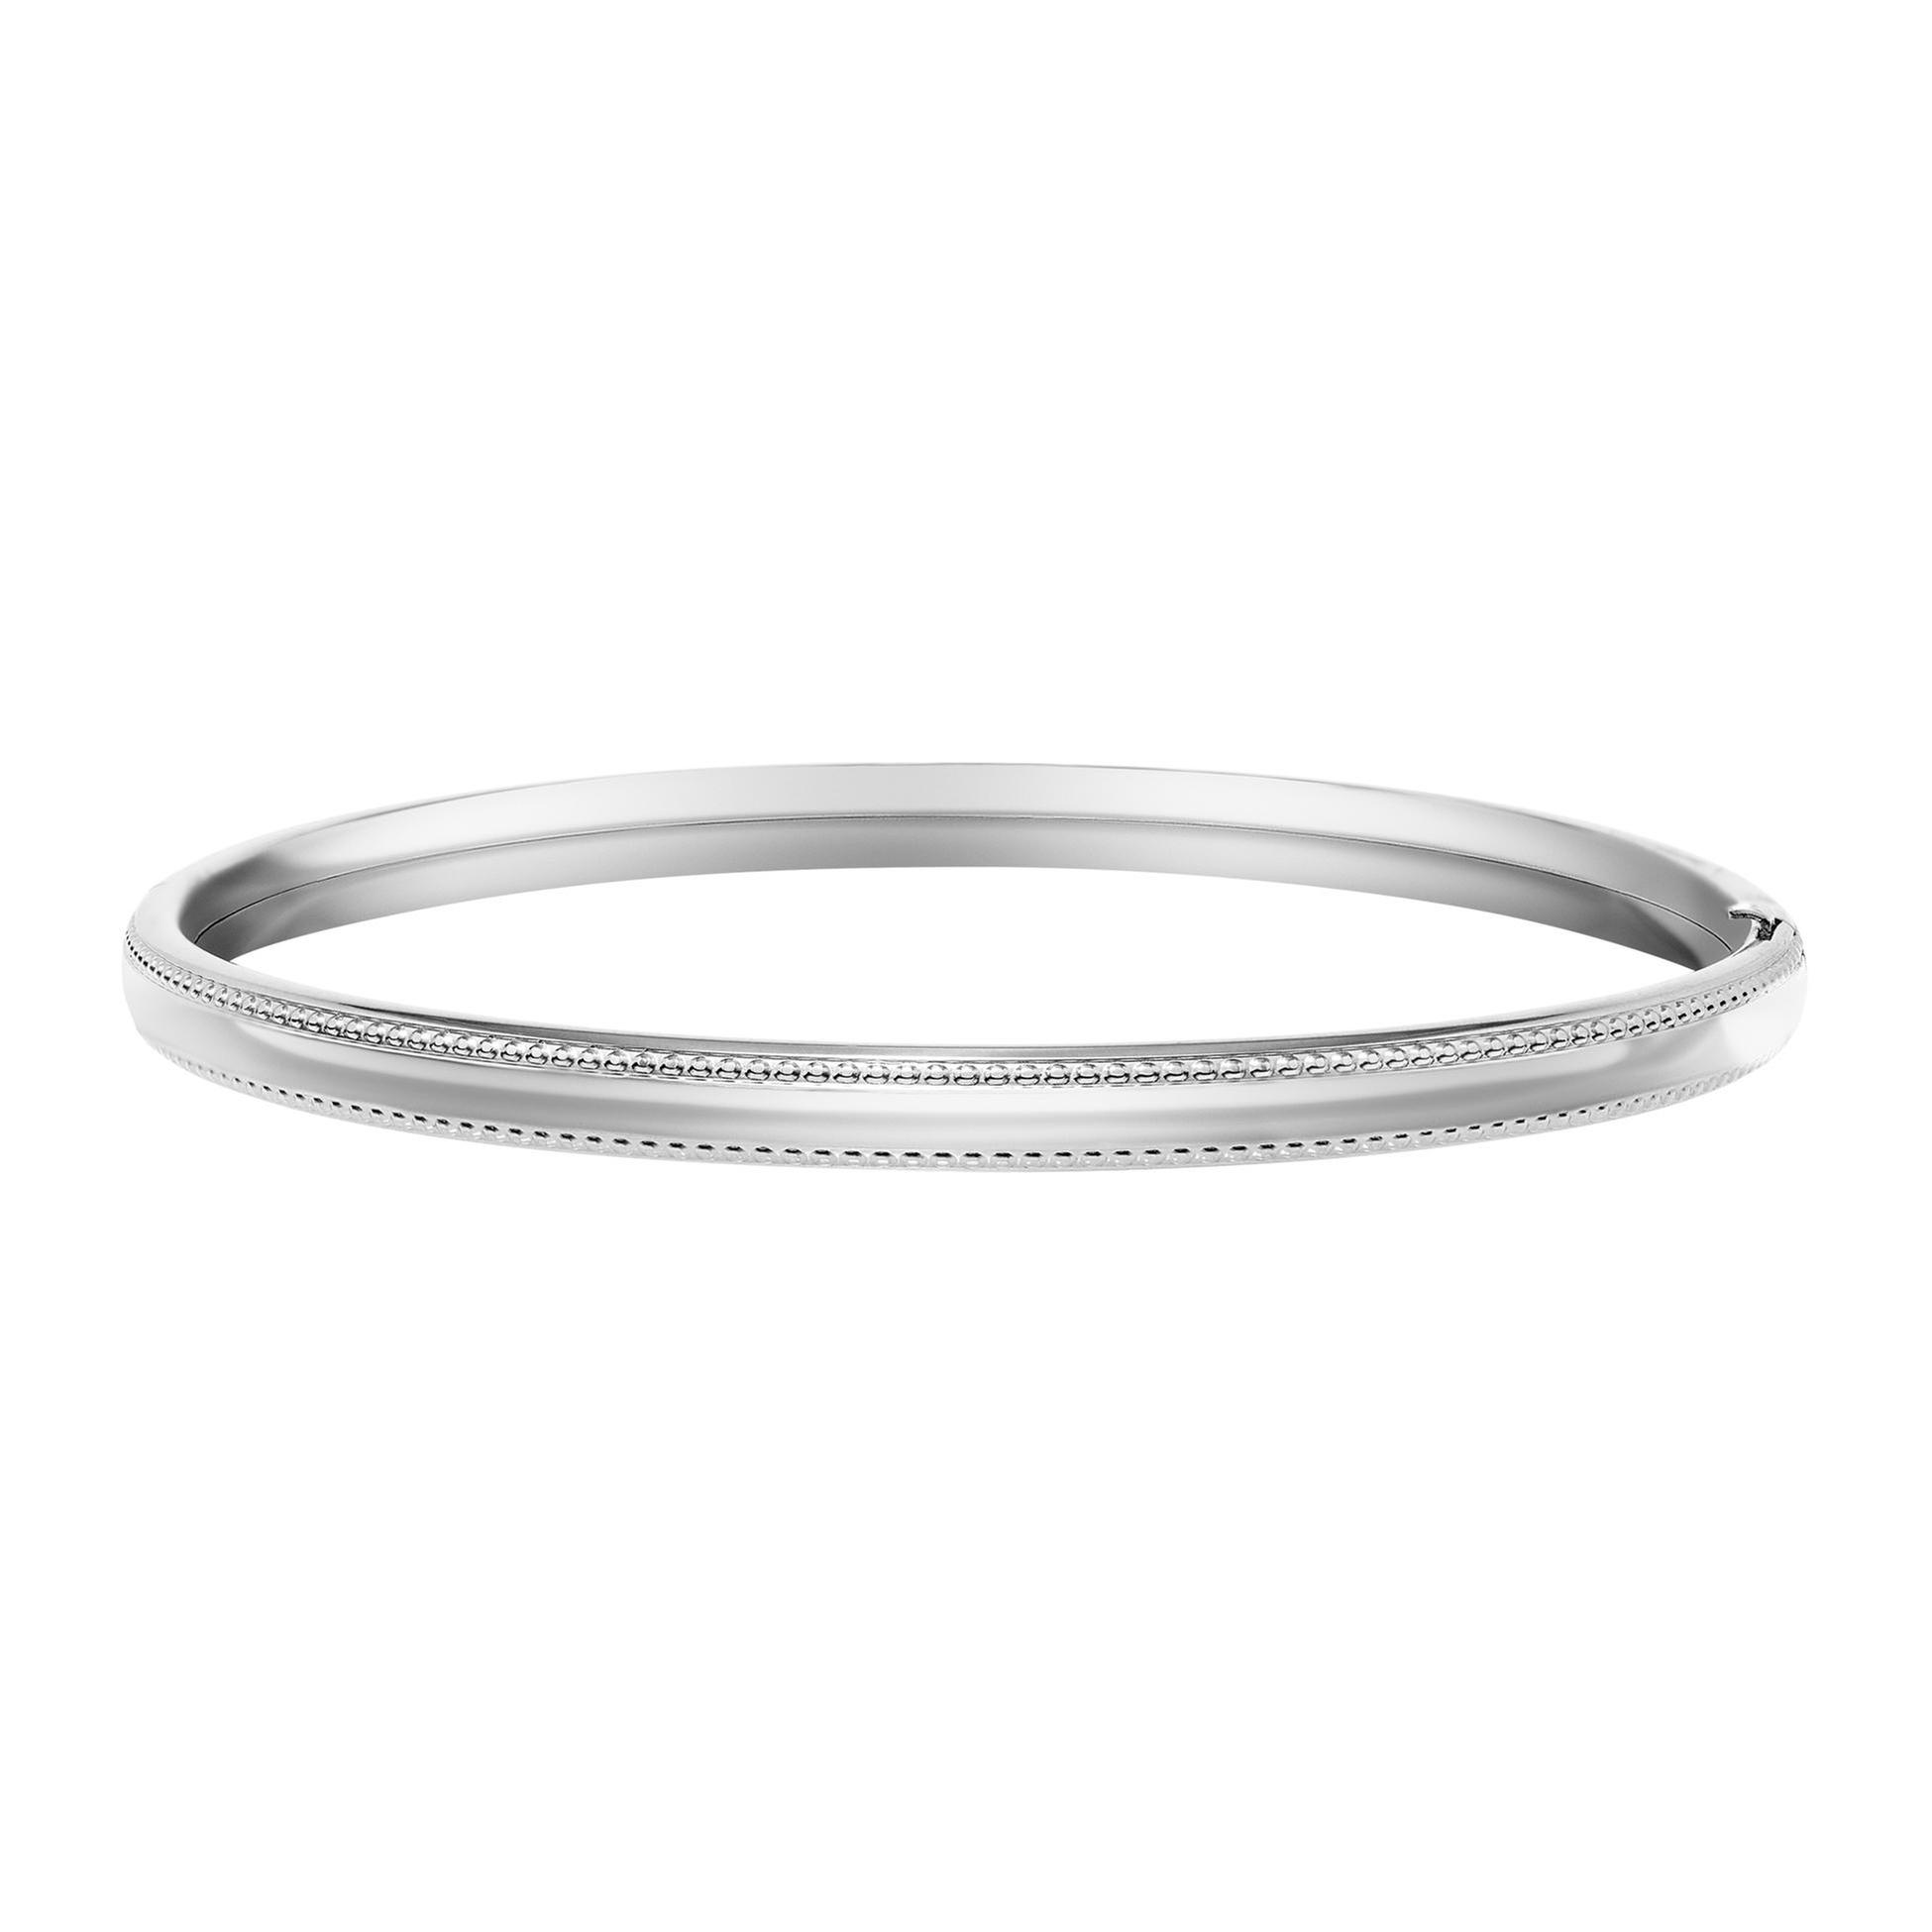 Beaded Edge Sterling Silver Bangle Bracelet | 5mm -  REEDS, PM267RJ